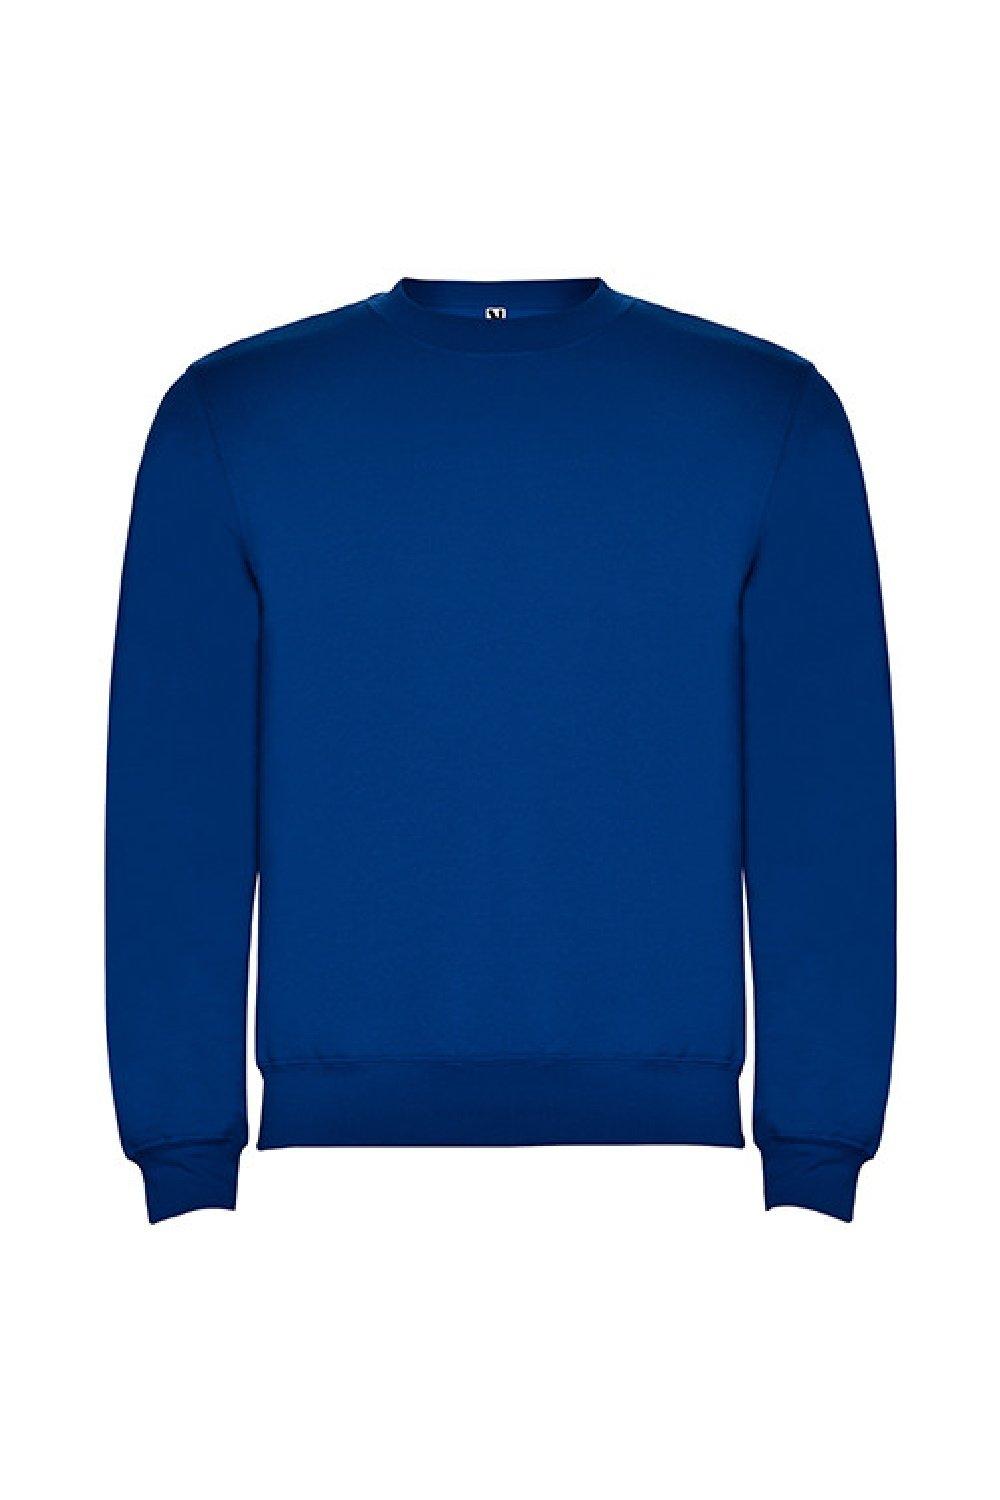 Plain Brightly Coloured Cotton Sweatshirt Jumper Sweater